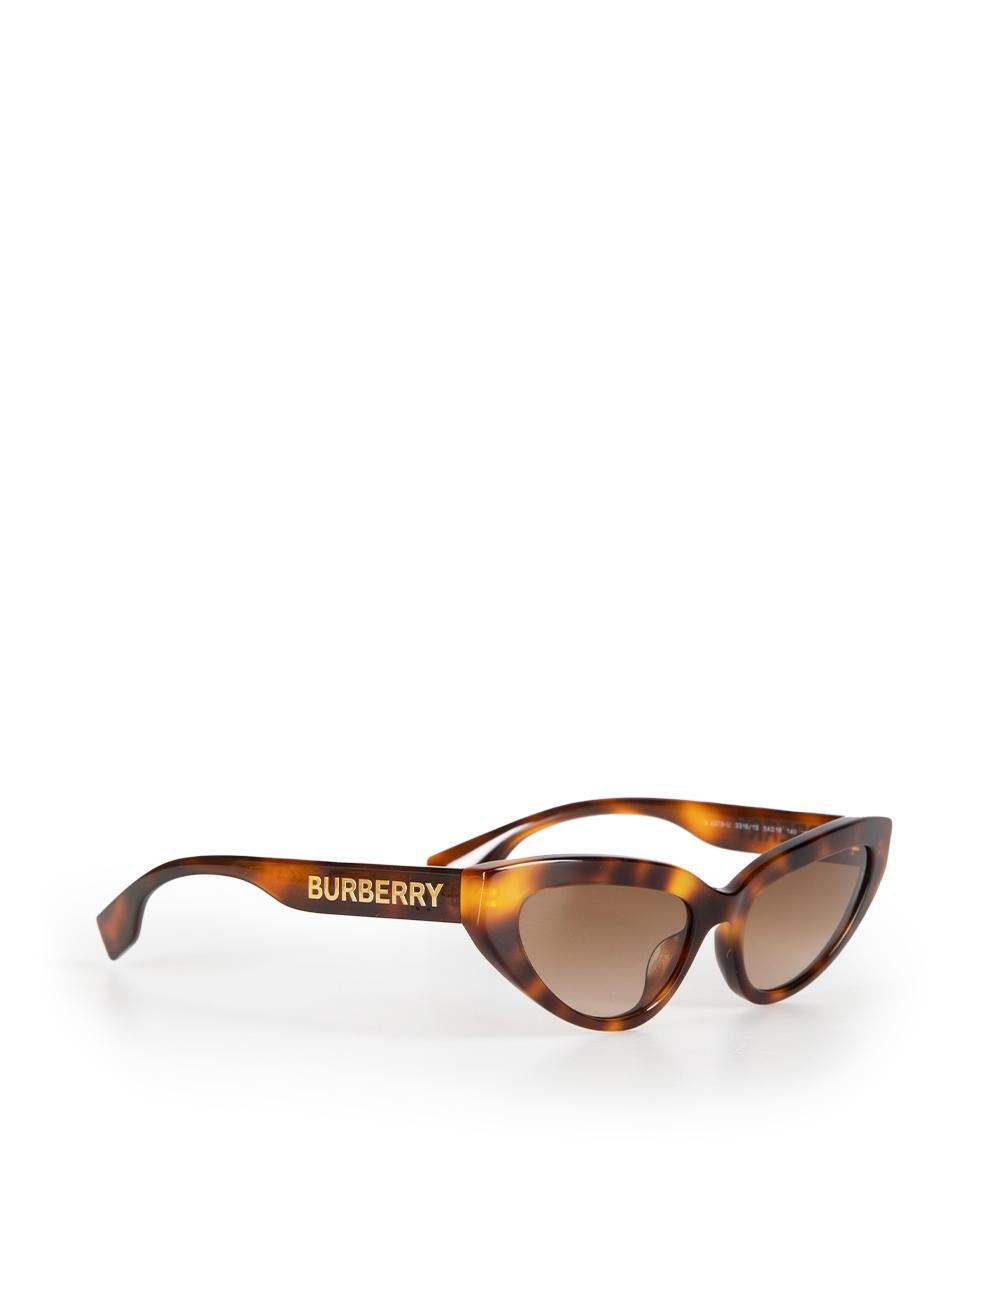 Burberry Light Havana Debbie Cat Eye Sunglasses In New Condition For Sale In London, GB